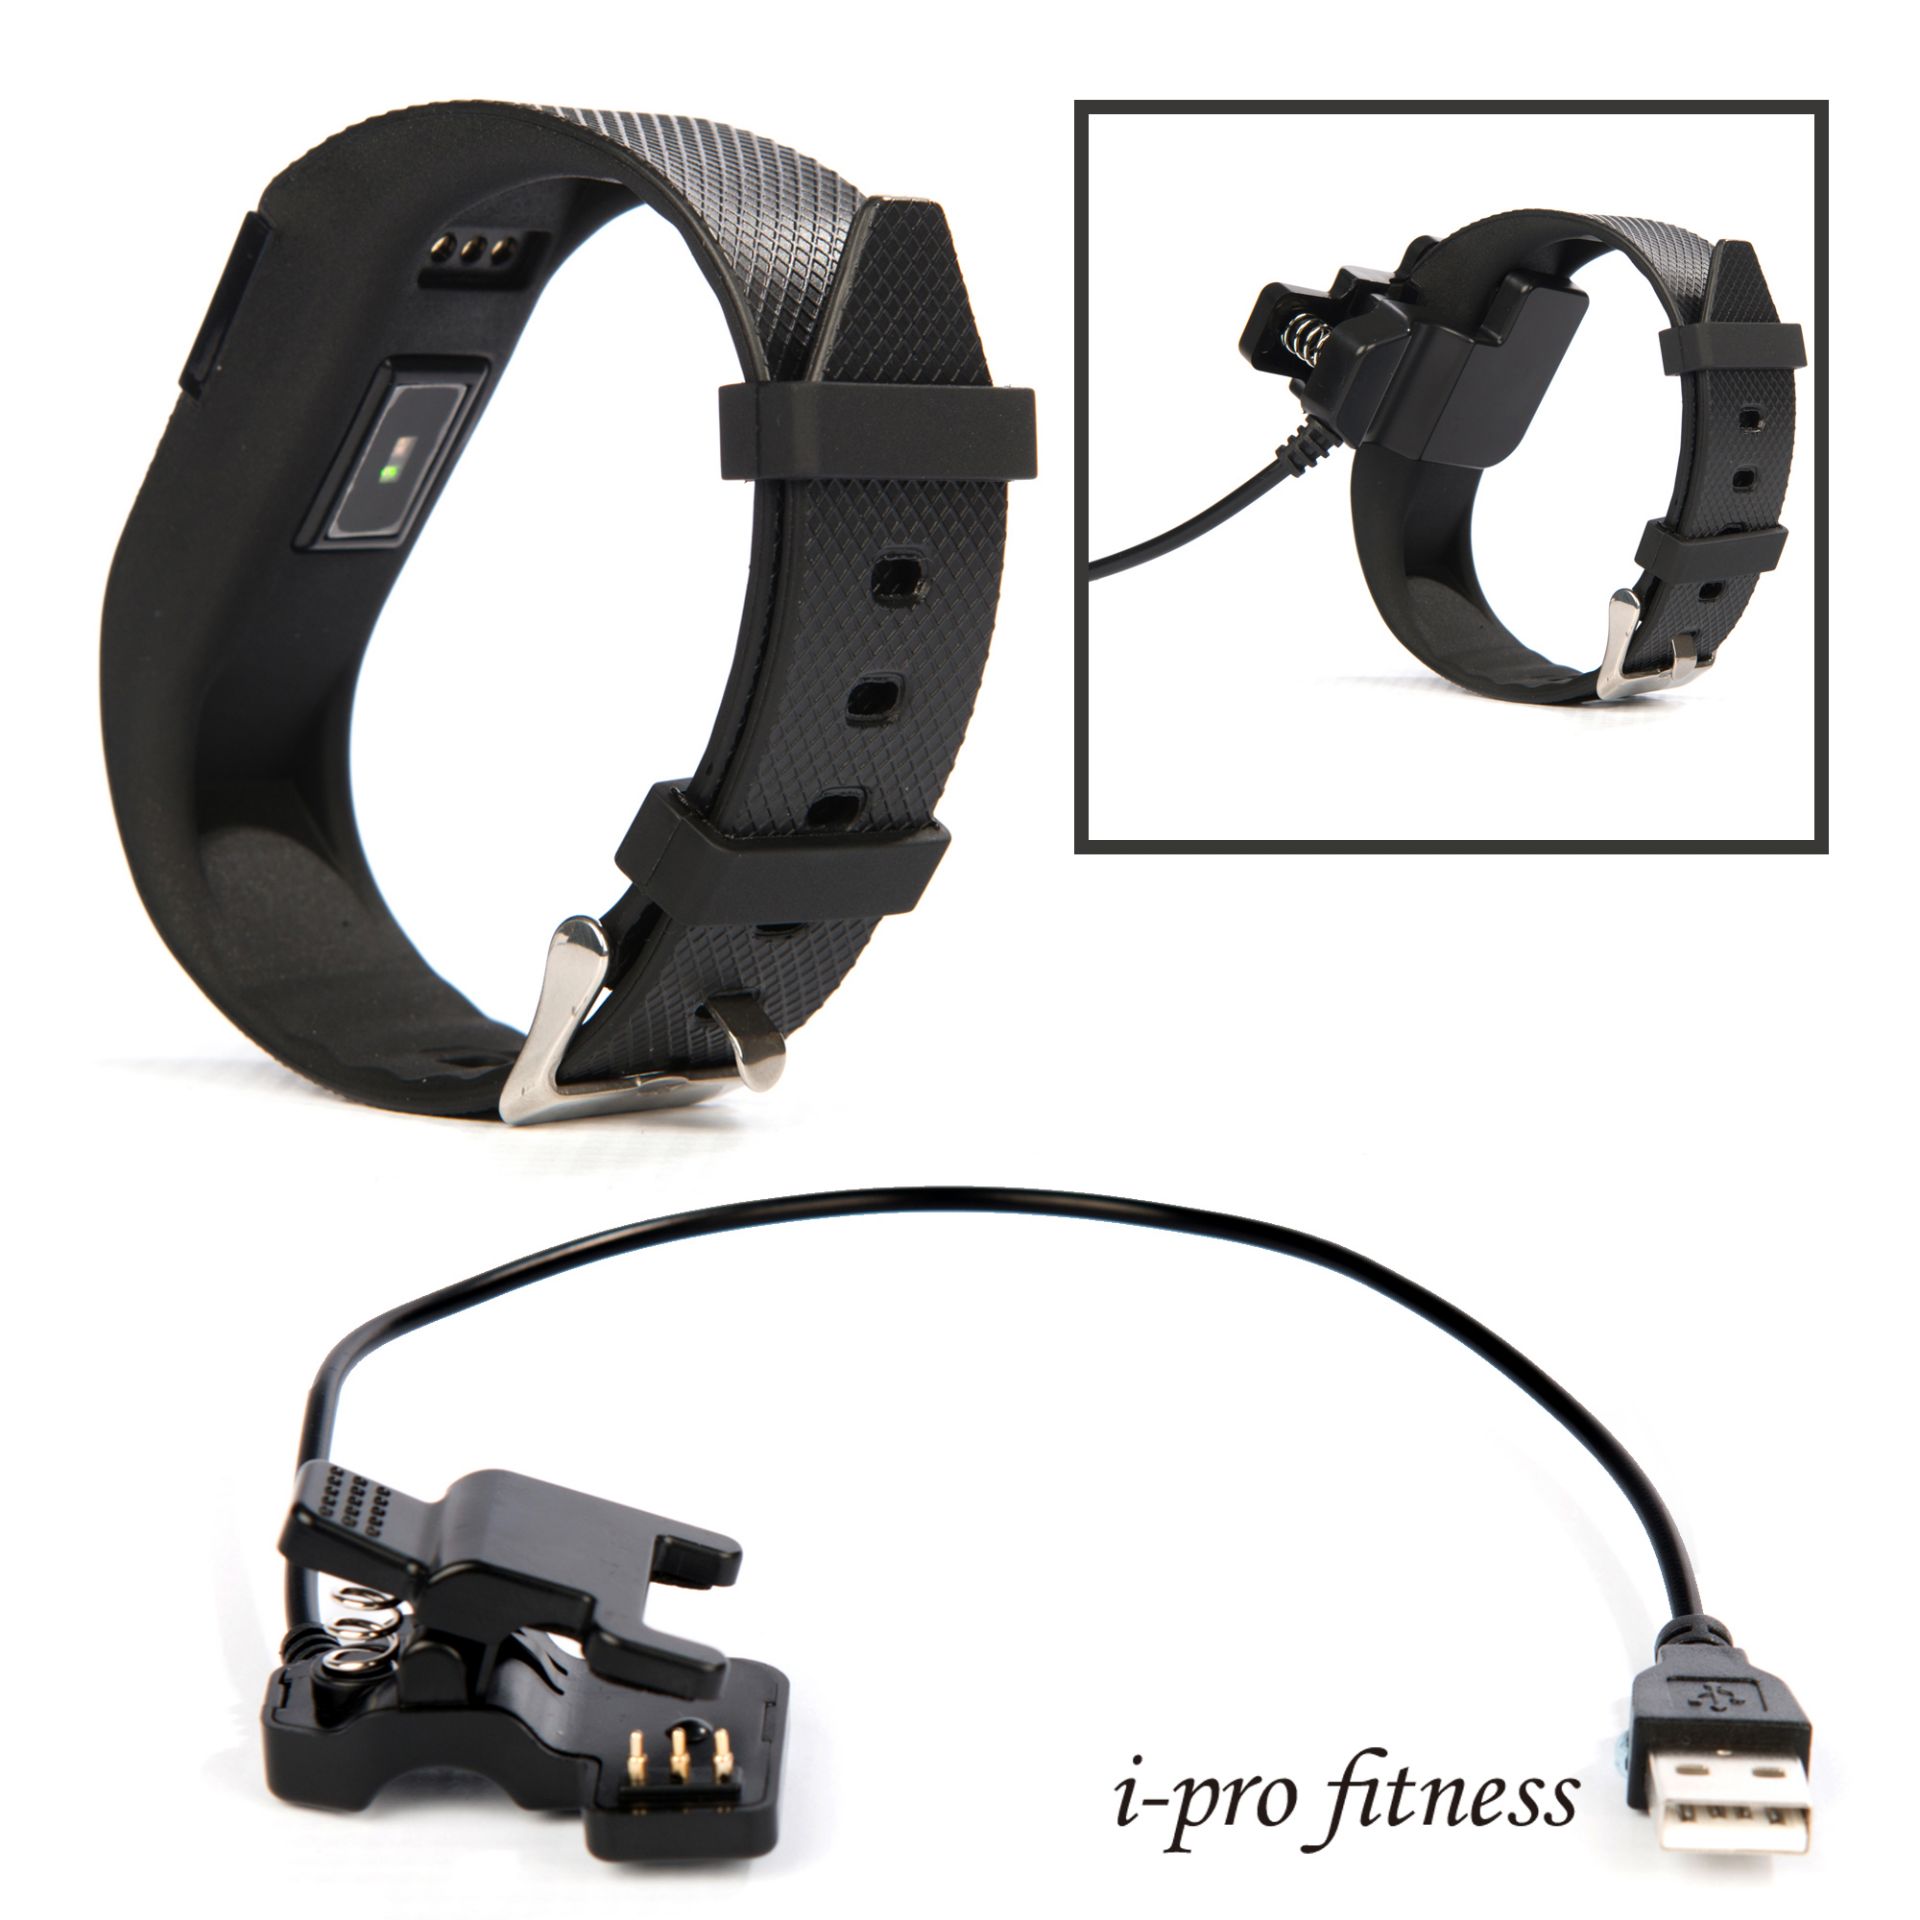 Fitness Tracker i-pro fitness, Bluetooth 4.0 Sports Smart Bracelet, Heart Rate Monitor, Pedometer. - Image 7 of 8